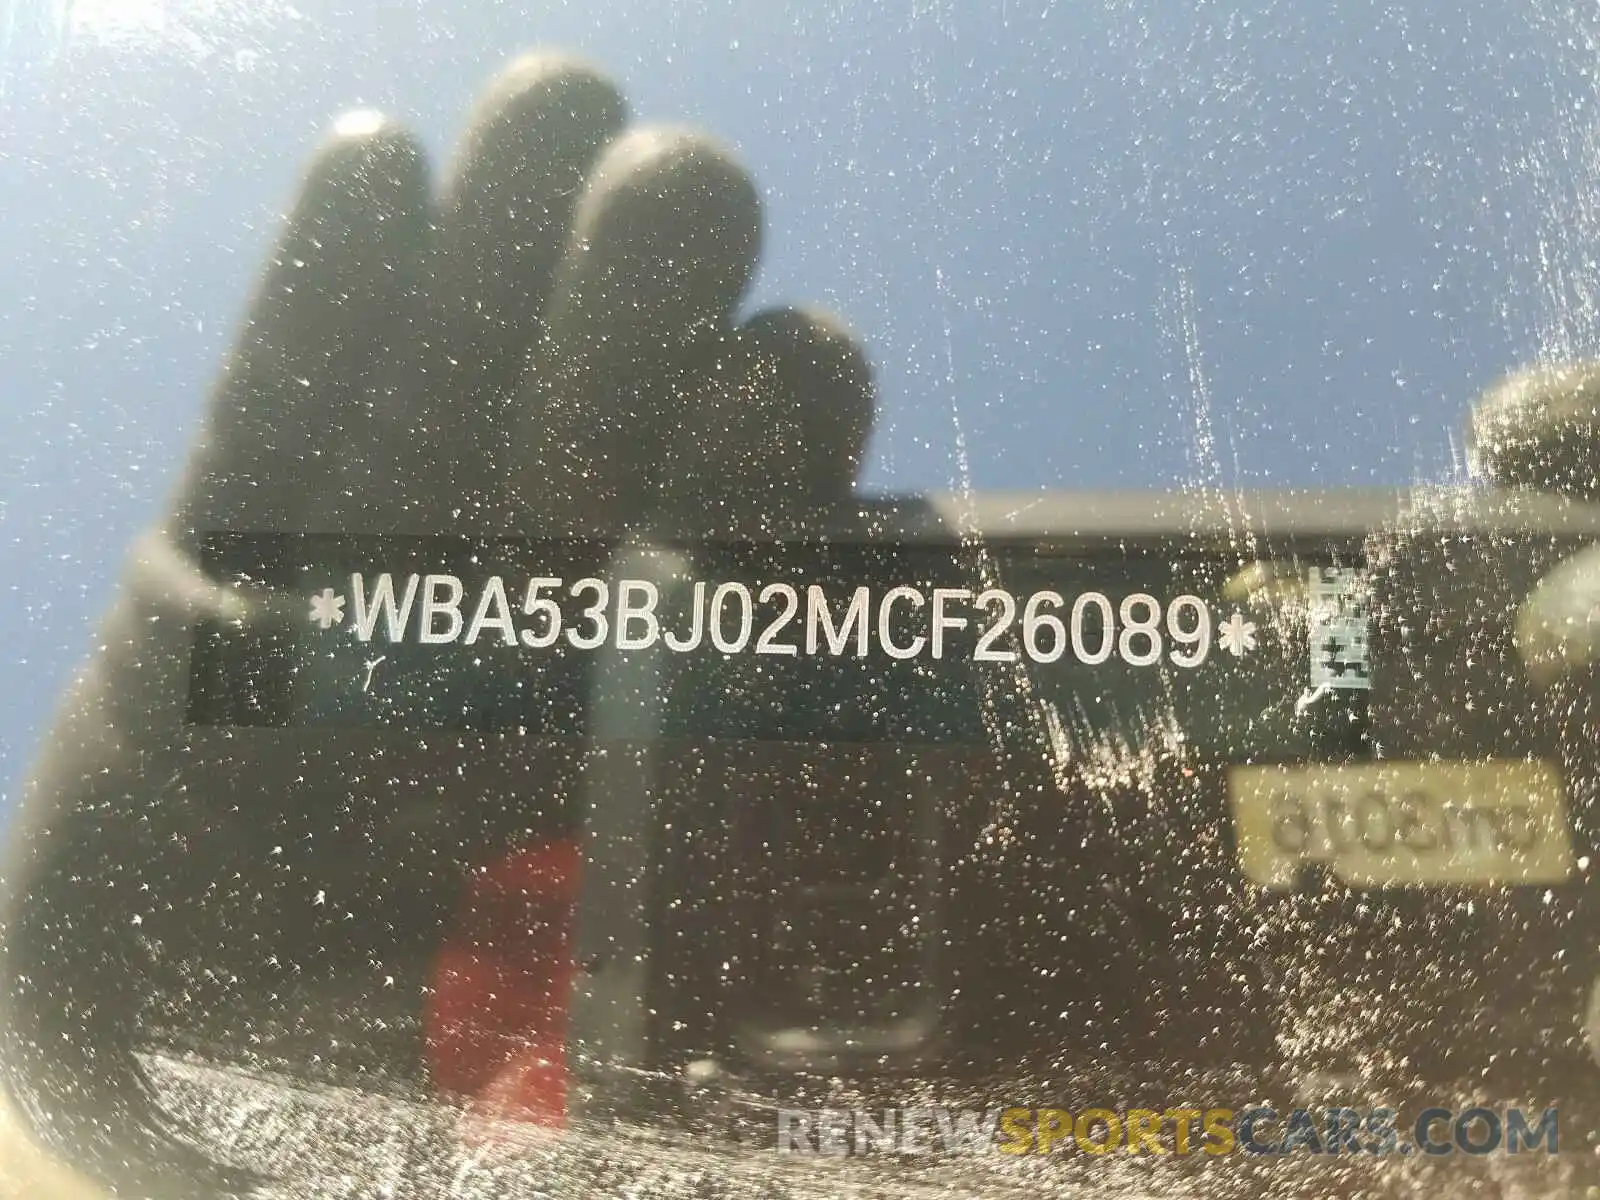 10 Photograph of a damaged car WBA53BJ02MCF26089 BMW 5 SERIES 2021